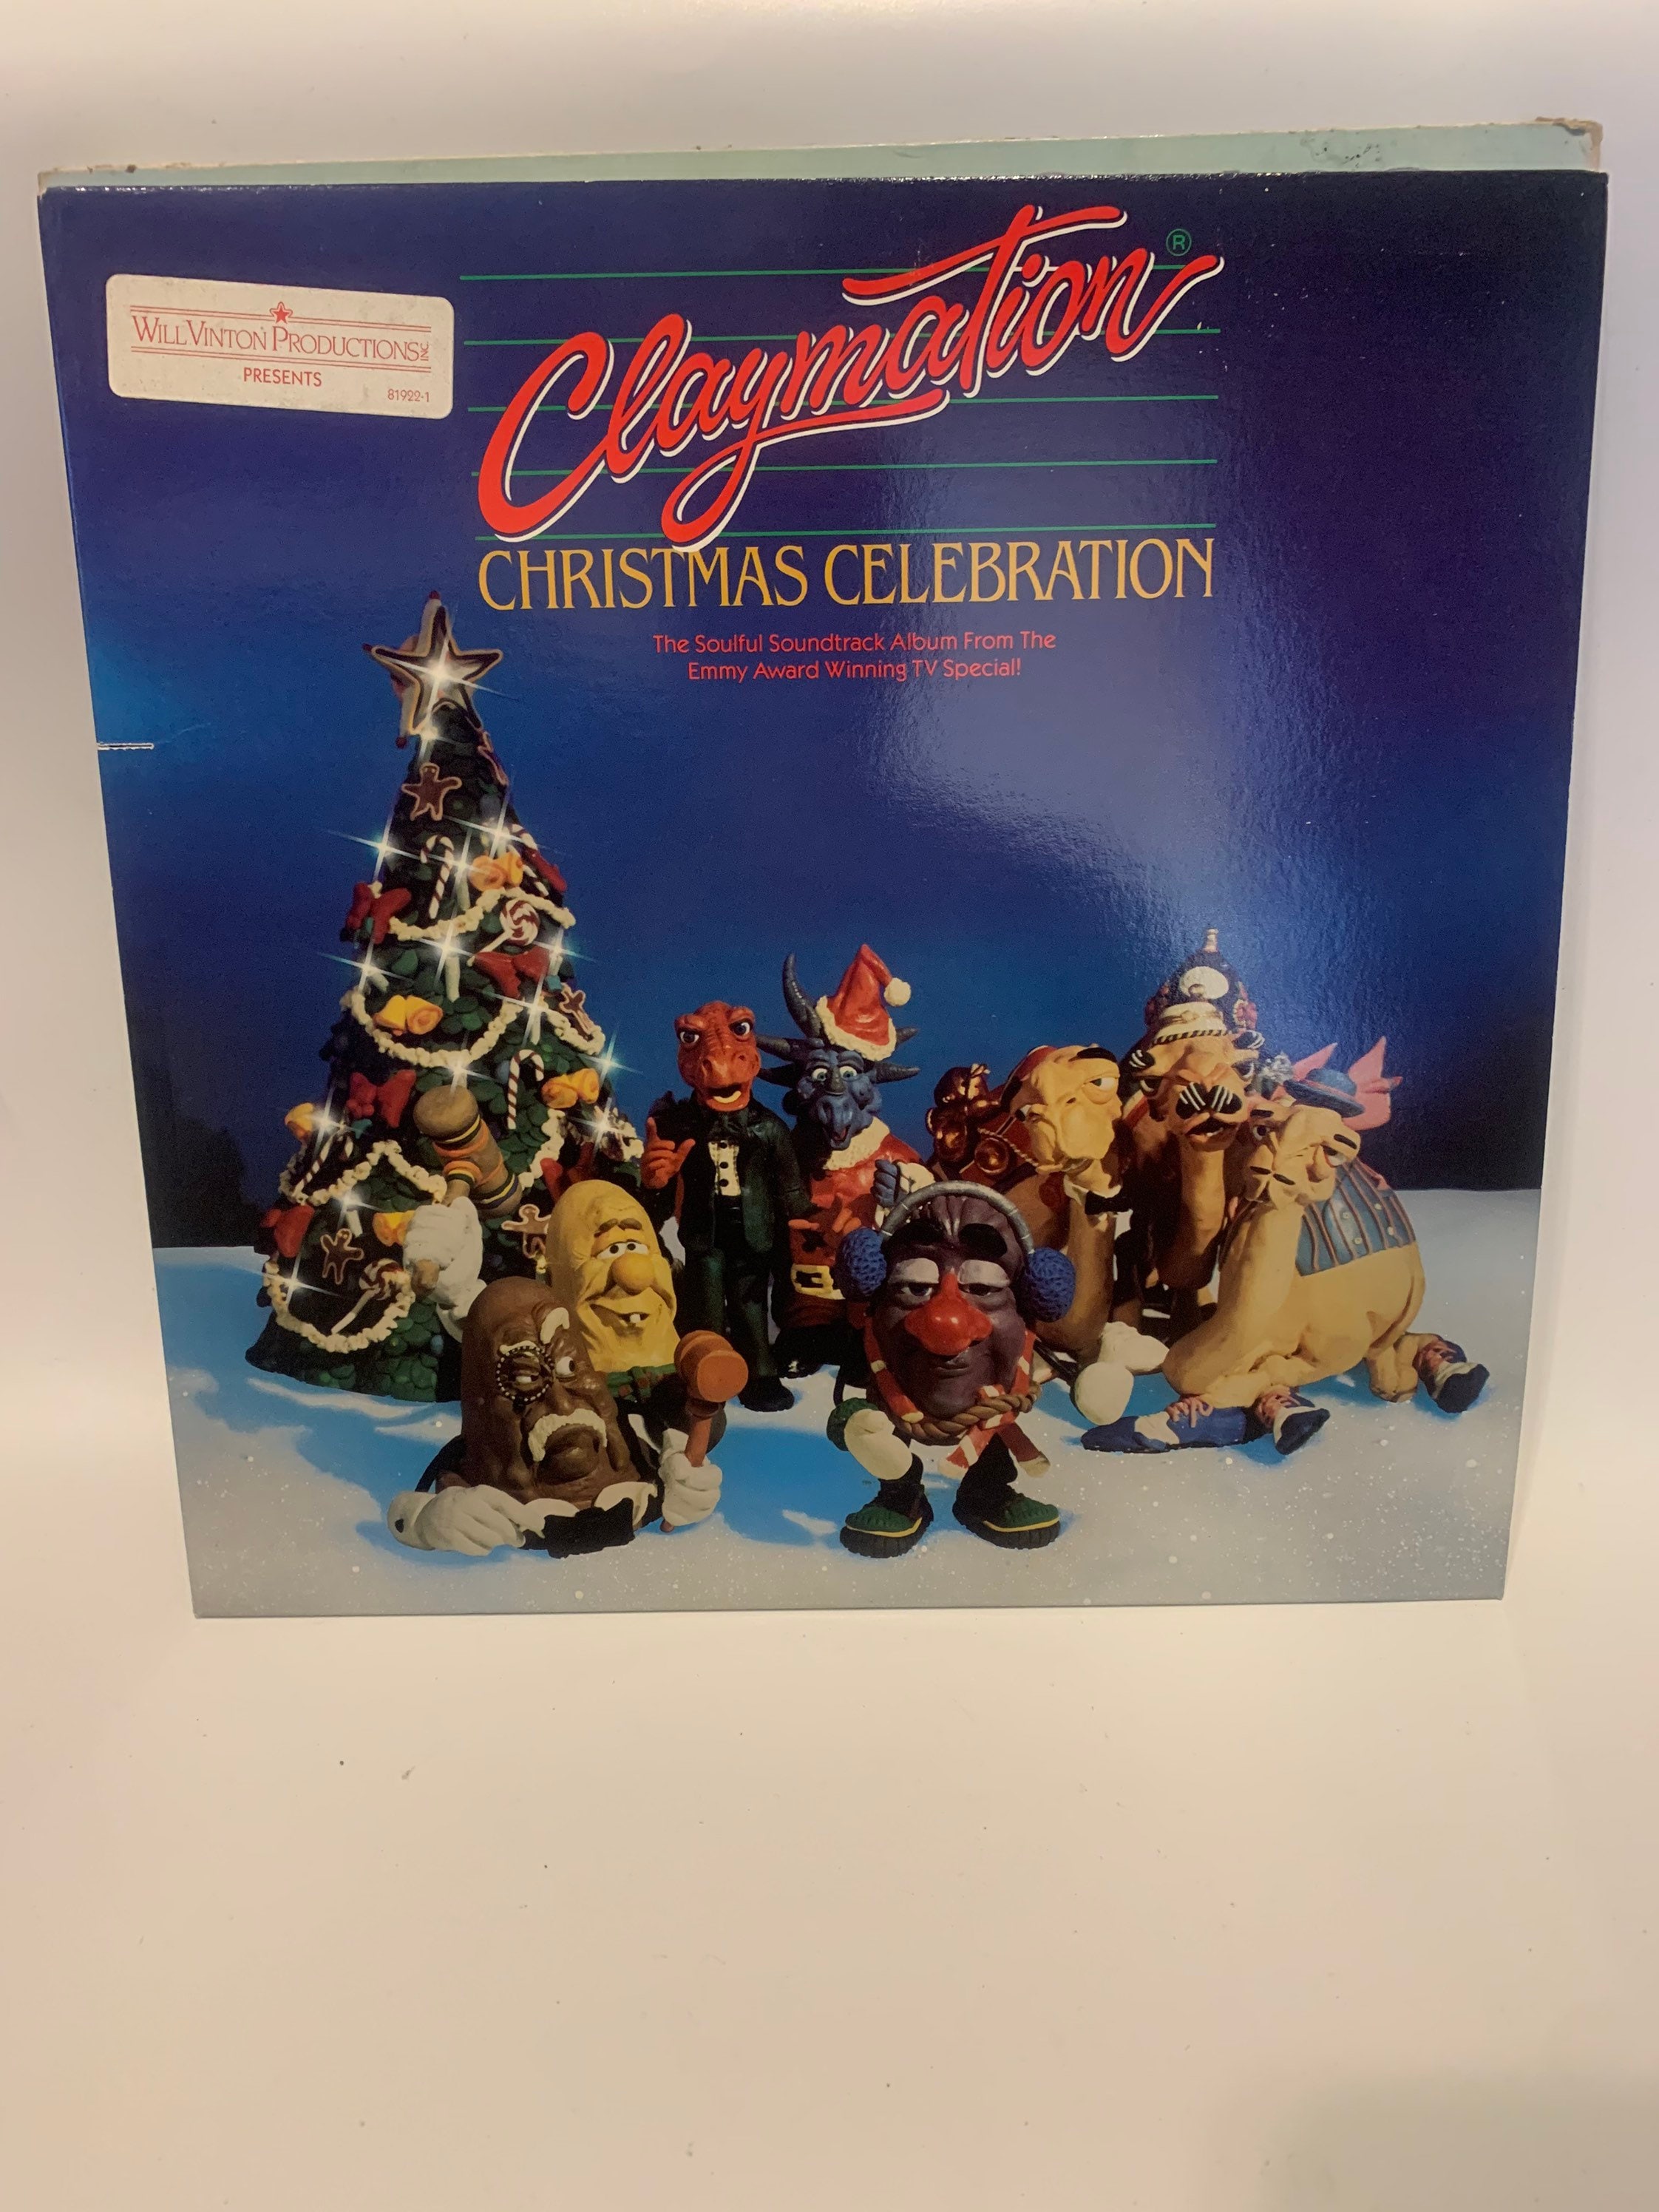  Audio CD. Christmas Celebration. Claymation. Soundtrack From  the Emmy Award Winning TV Special. (81922): CDs & Vinyl